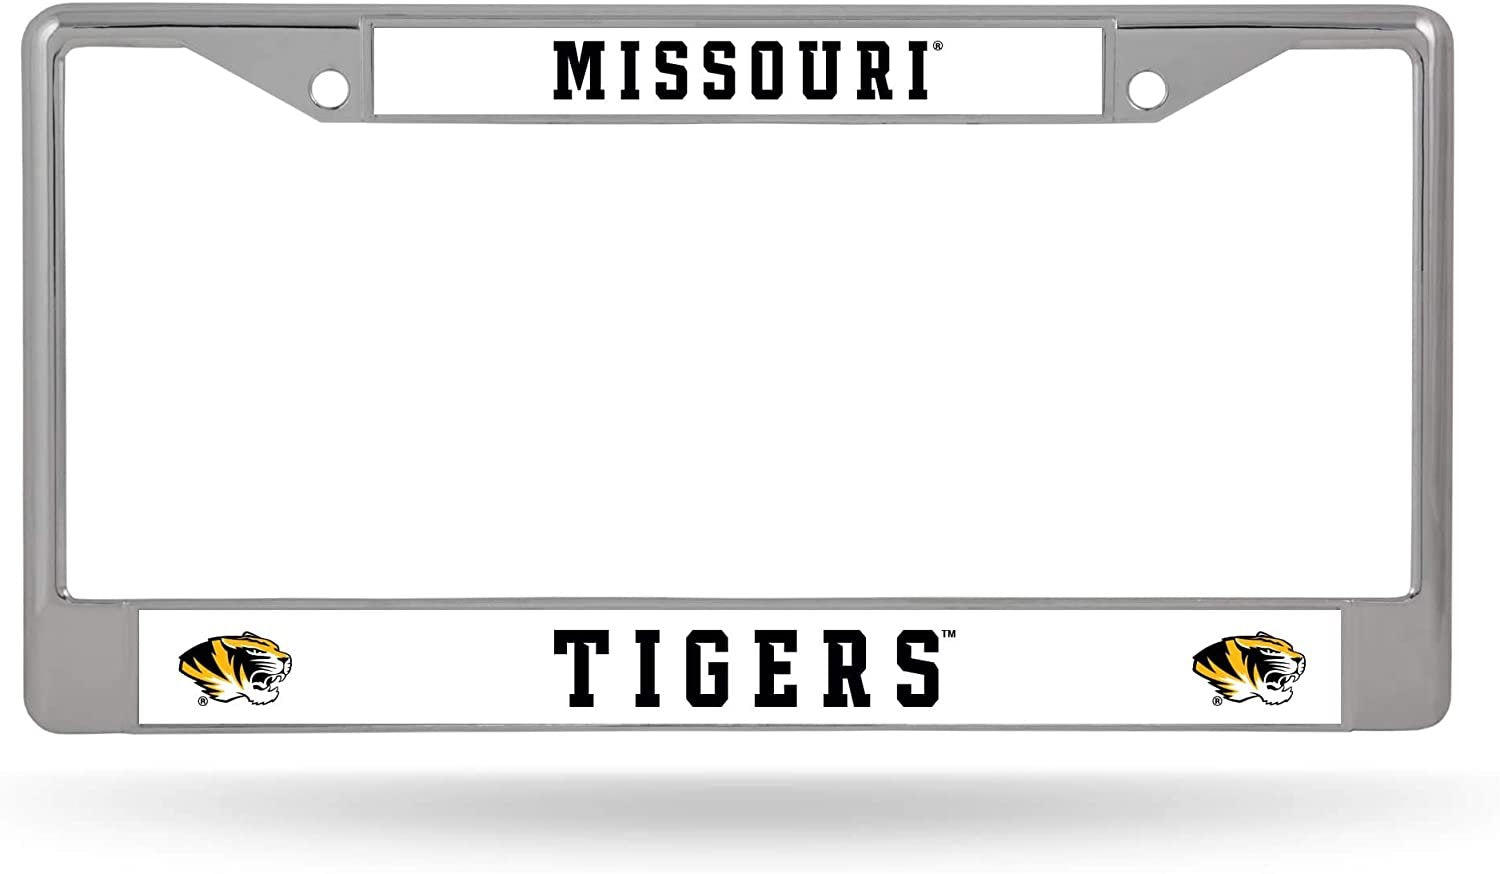 University of Missouri Tigers Premium Metal License Plate Frame Chrome Tag Cover, 12x6 Inch